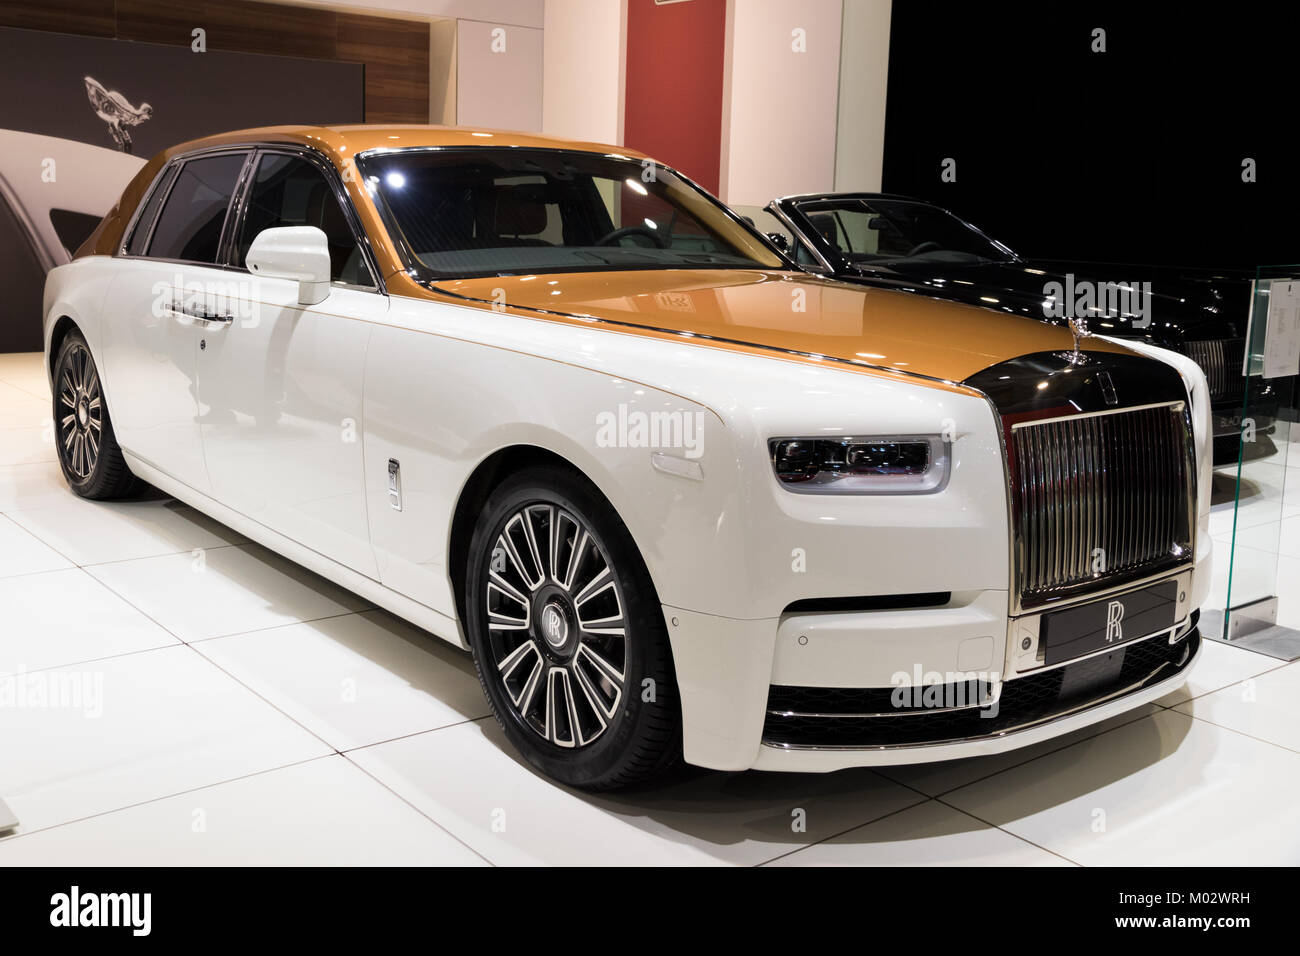 Brüssel - Jan 10, 2018: Rolls Royce Phantom Luxuslimousine Auto auf dem Automobil-Salon in Brüssel vorgestellt. Stockfoto